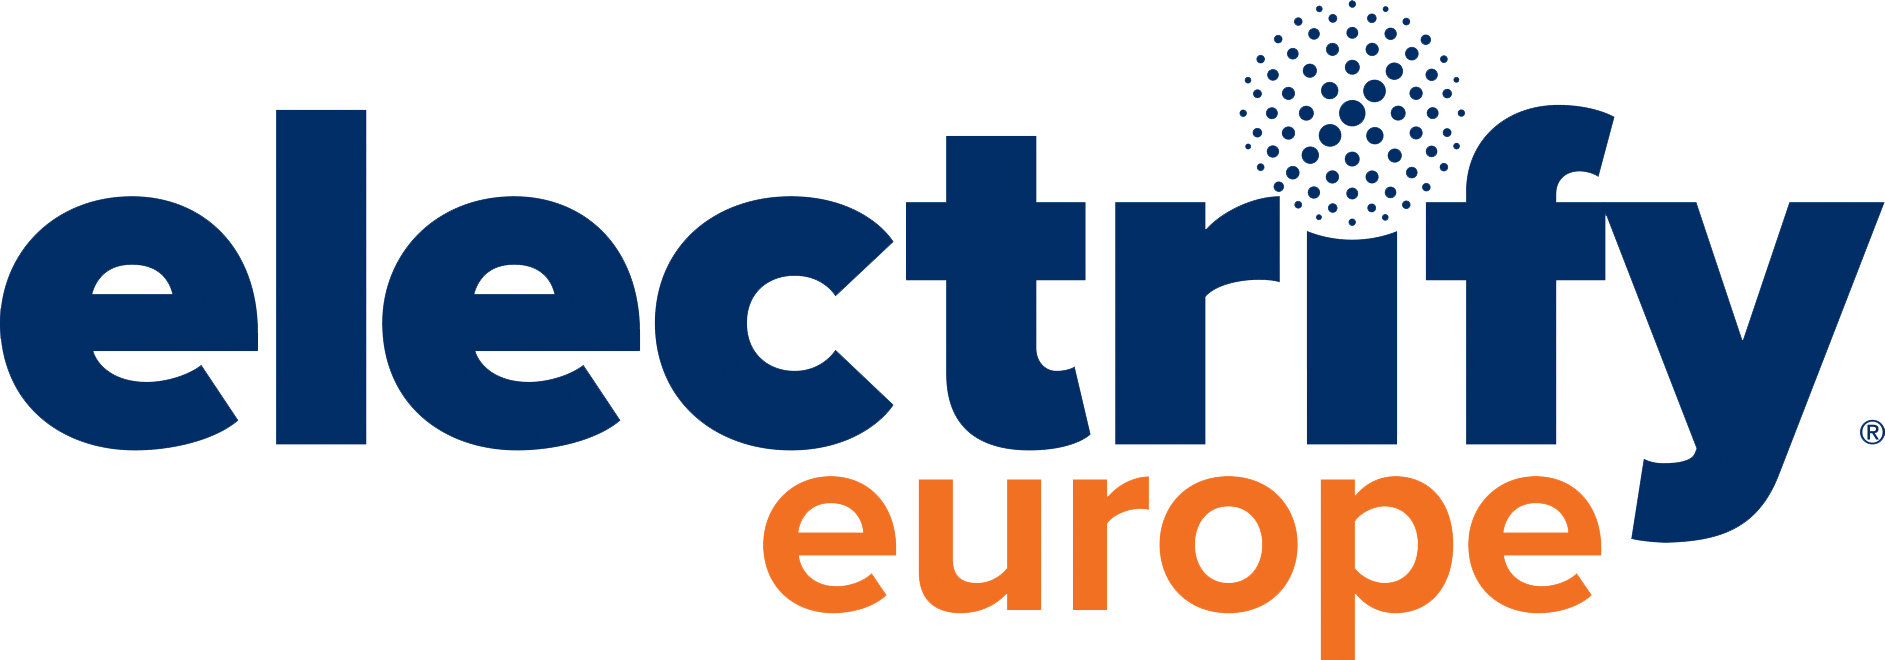 Electrify Europe Expo & Conference, 19-21 June 2018, Vienna, Austria